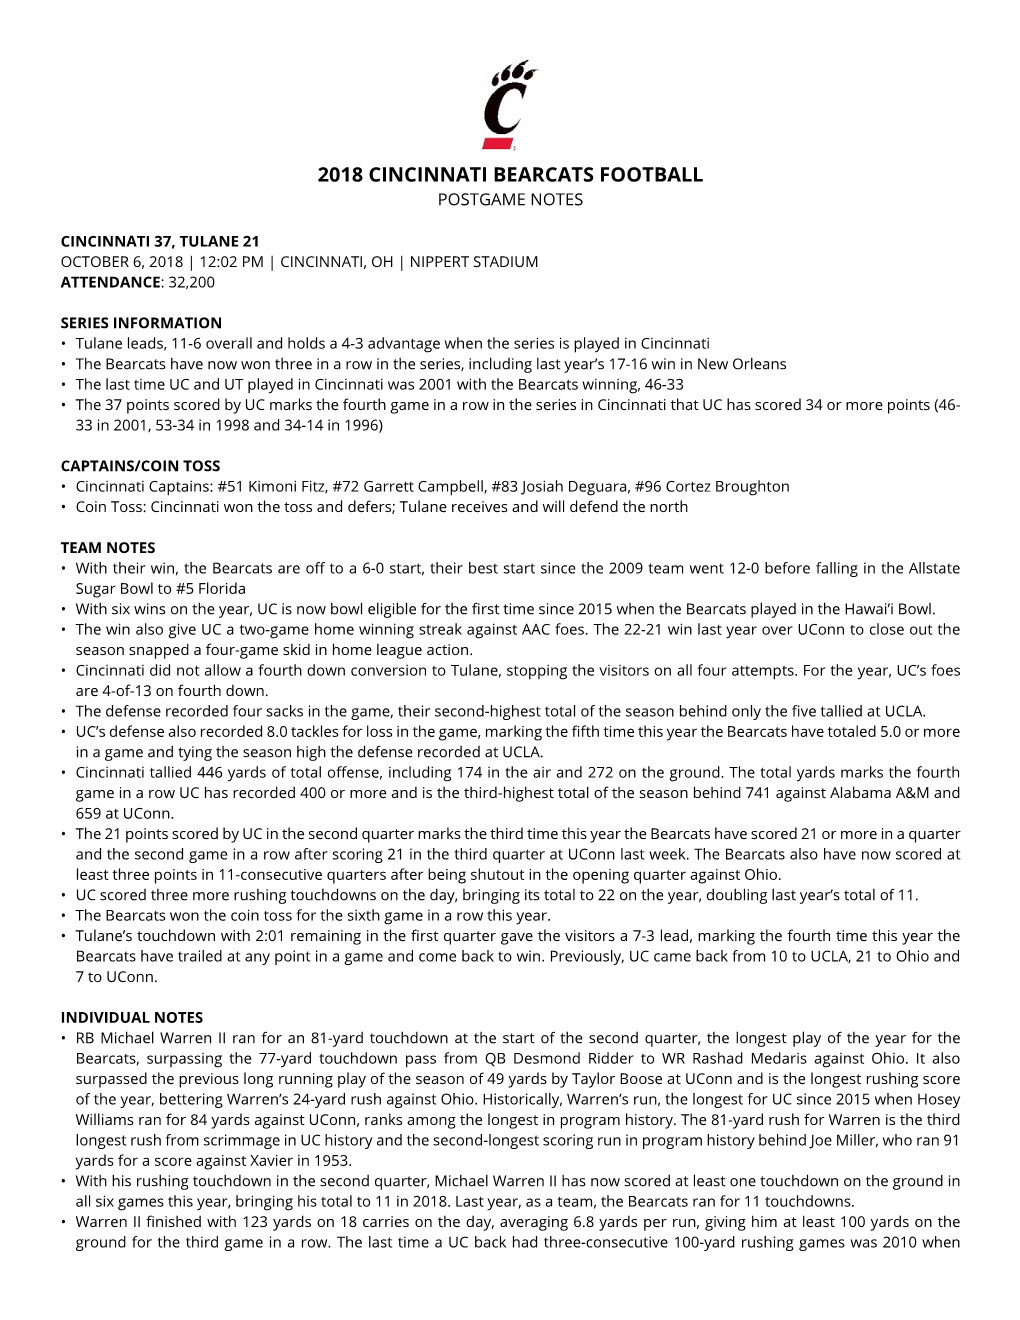 2018 Cincinnati Bearcats Football Postgame Notes